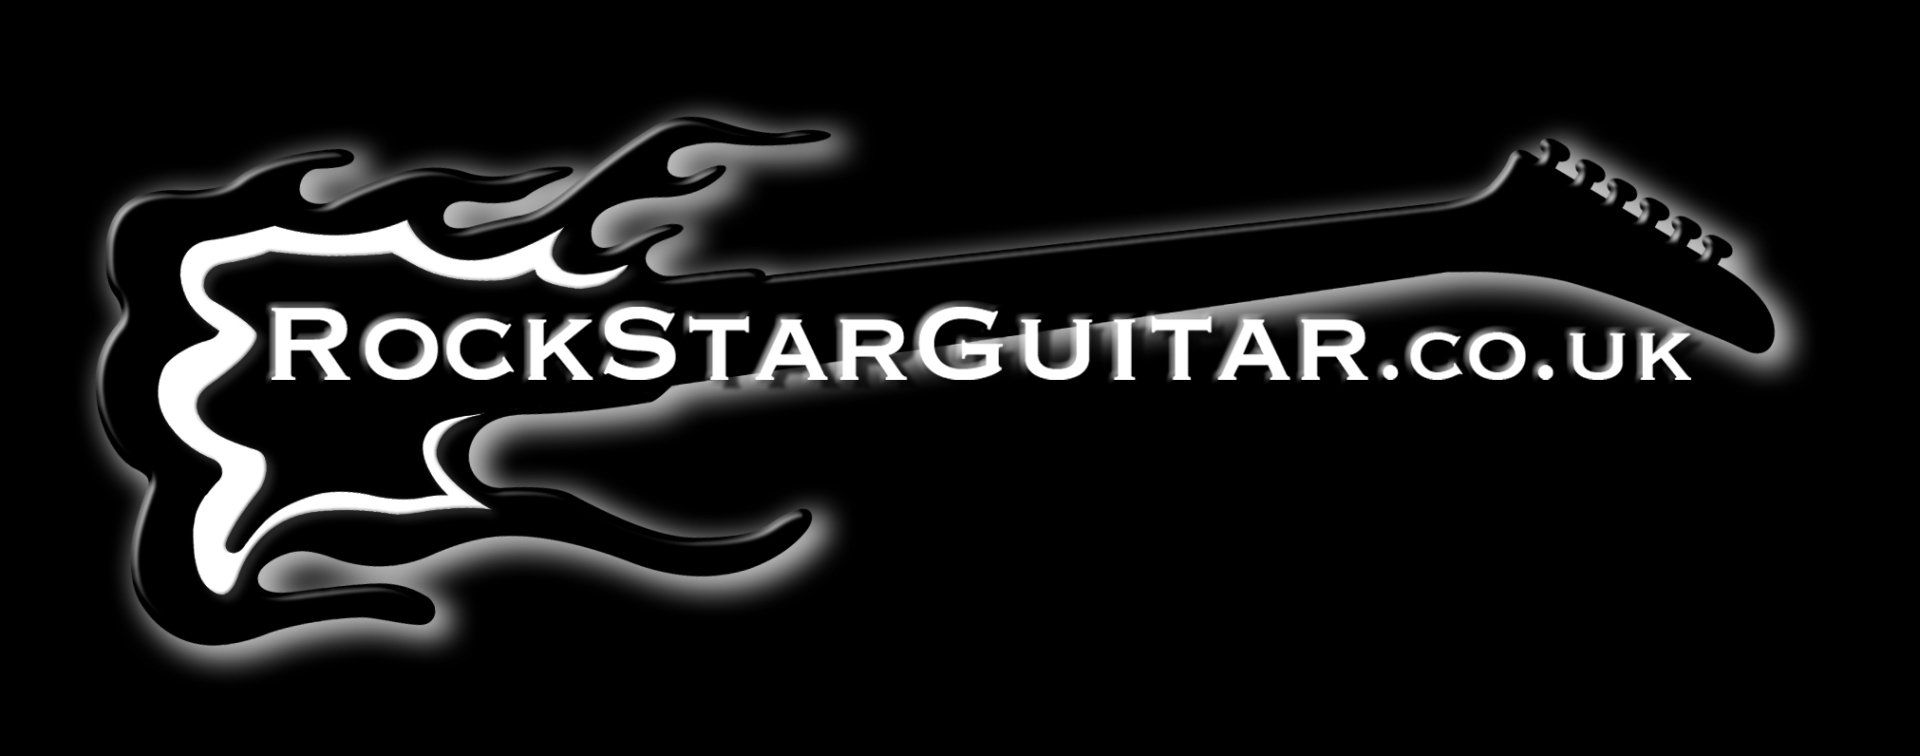 rockstar guitars blackheath